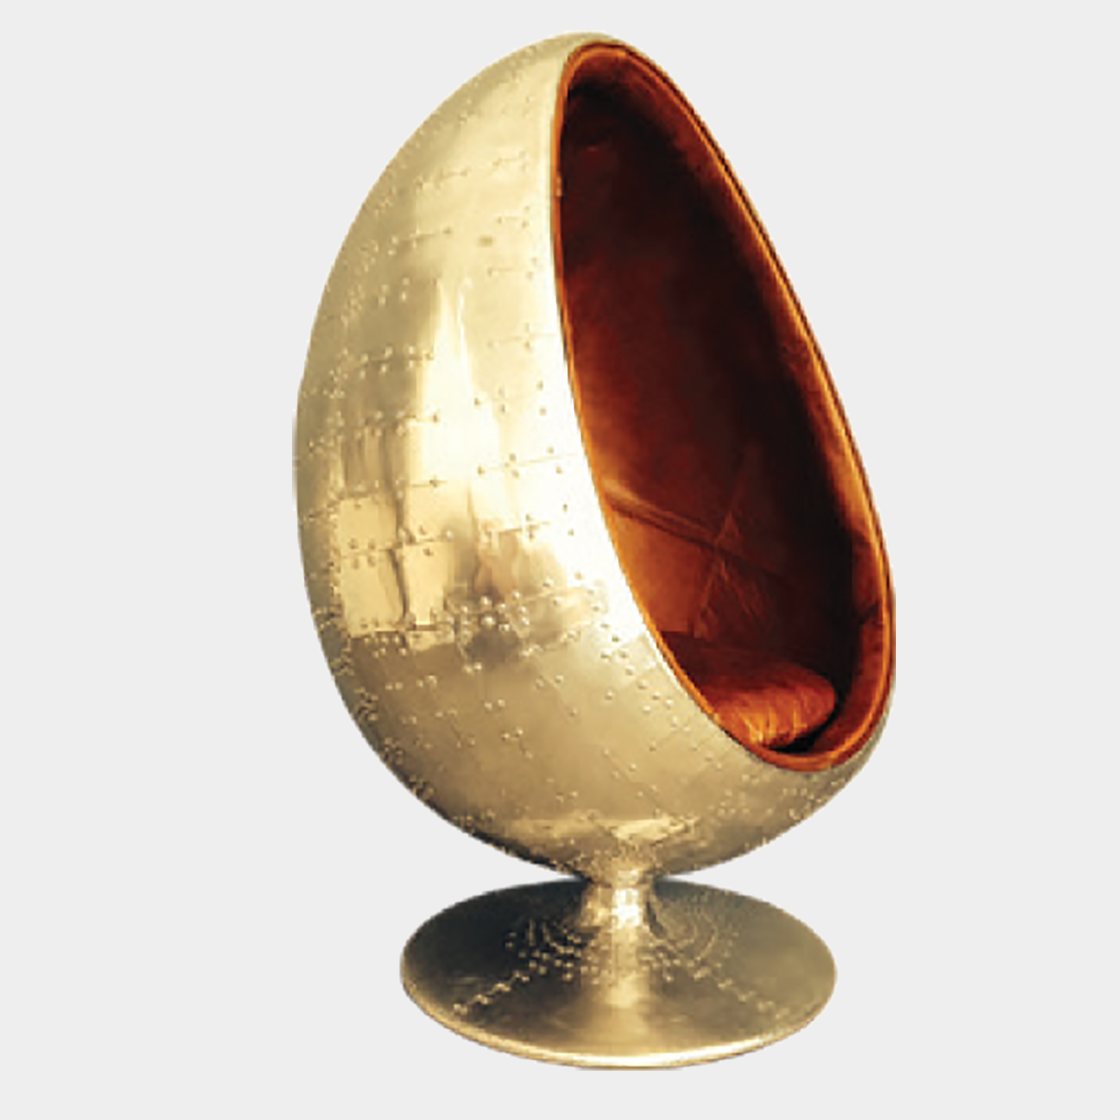 Banshee Oval Egg Chair - Aero-aluminium and Brazilian leather